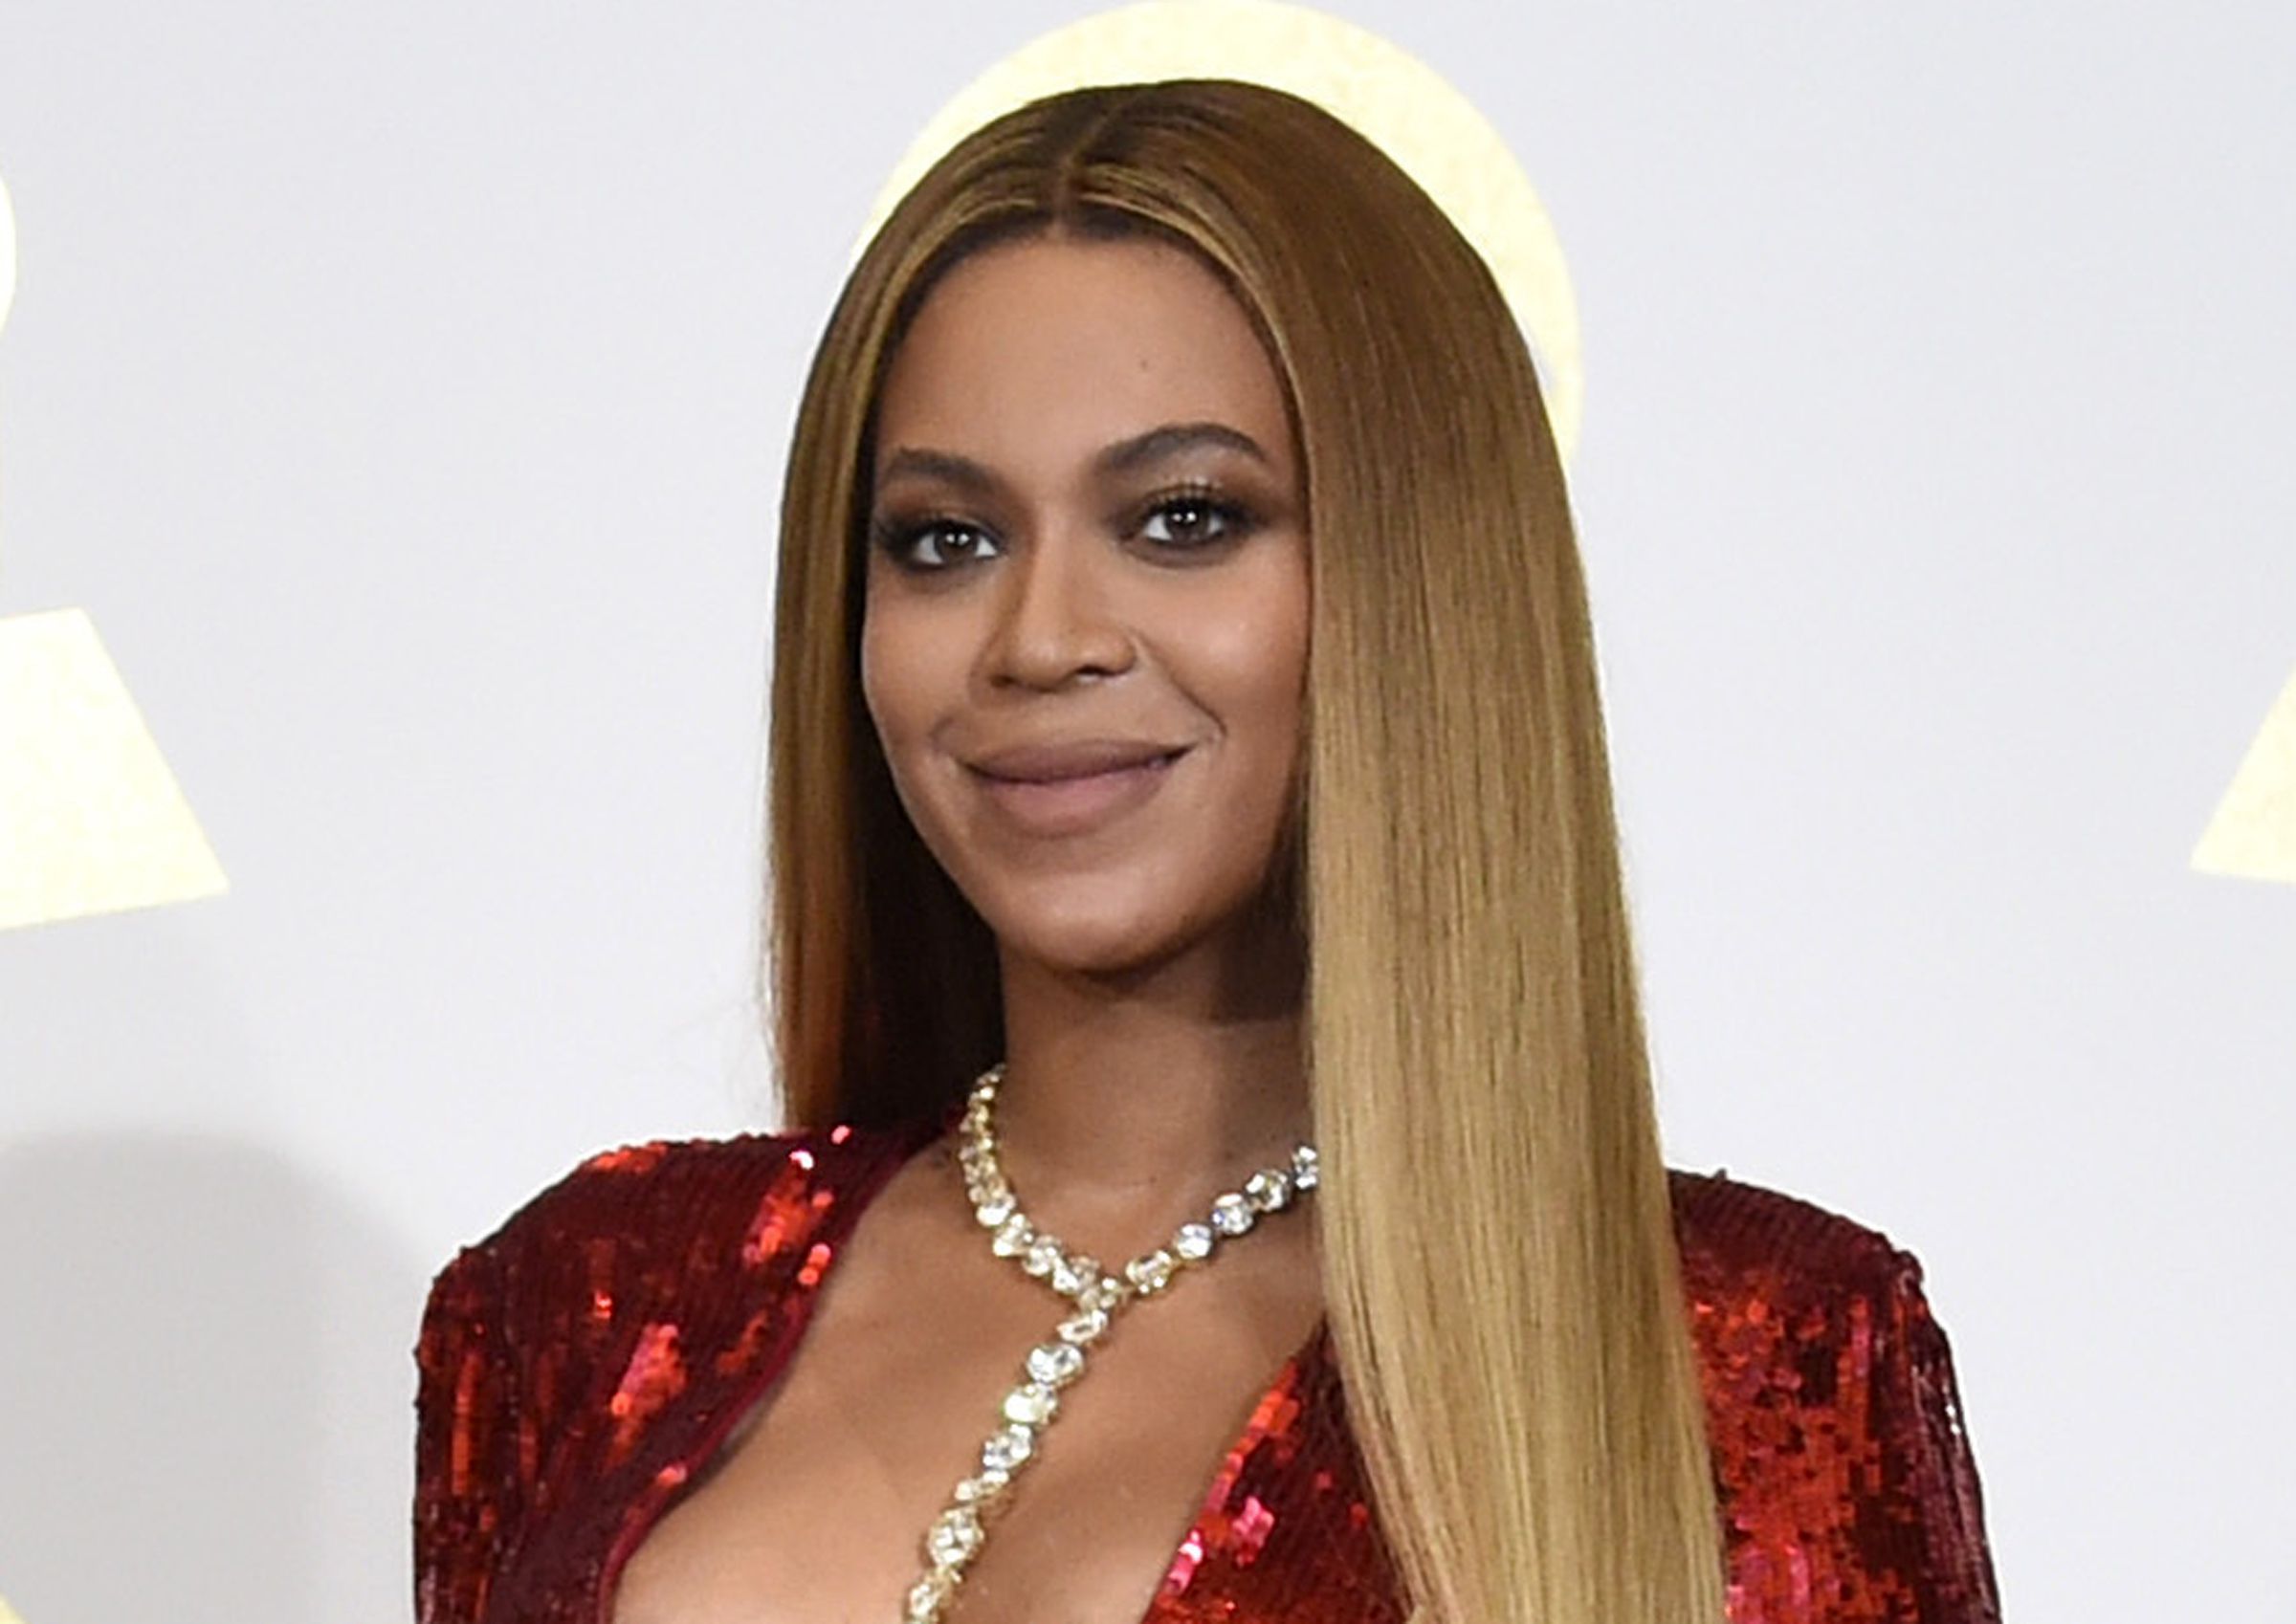 Grammys red carpet 2021: Beyonce, Harry Styles, Dua Lipa, Noah Cyrus